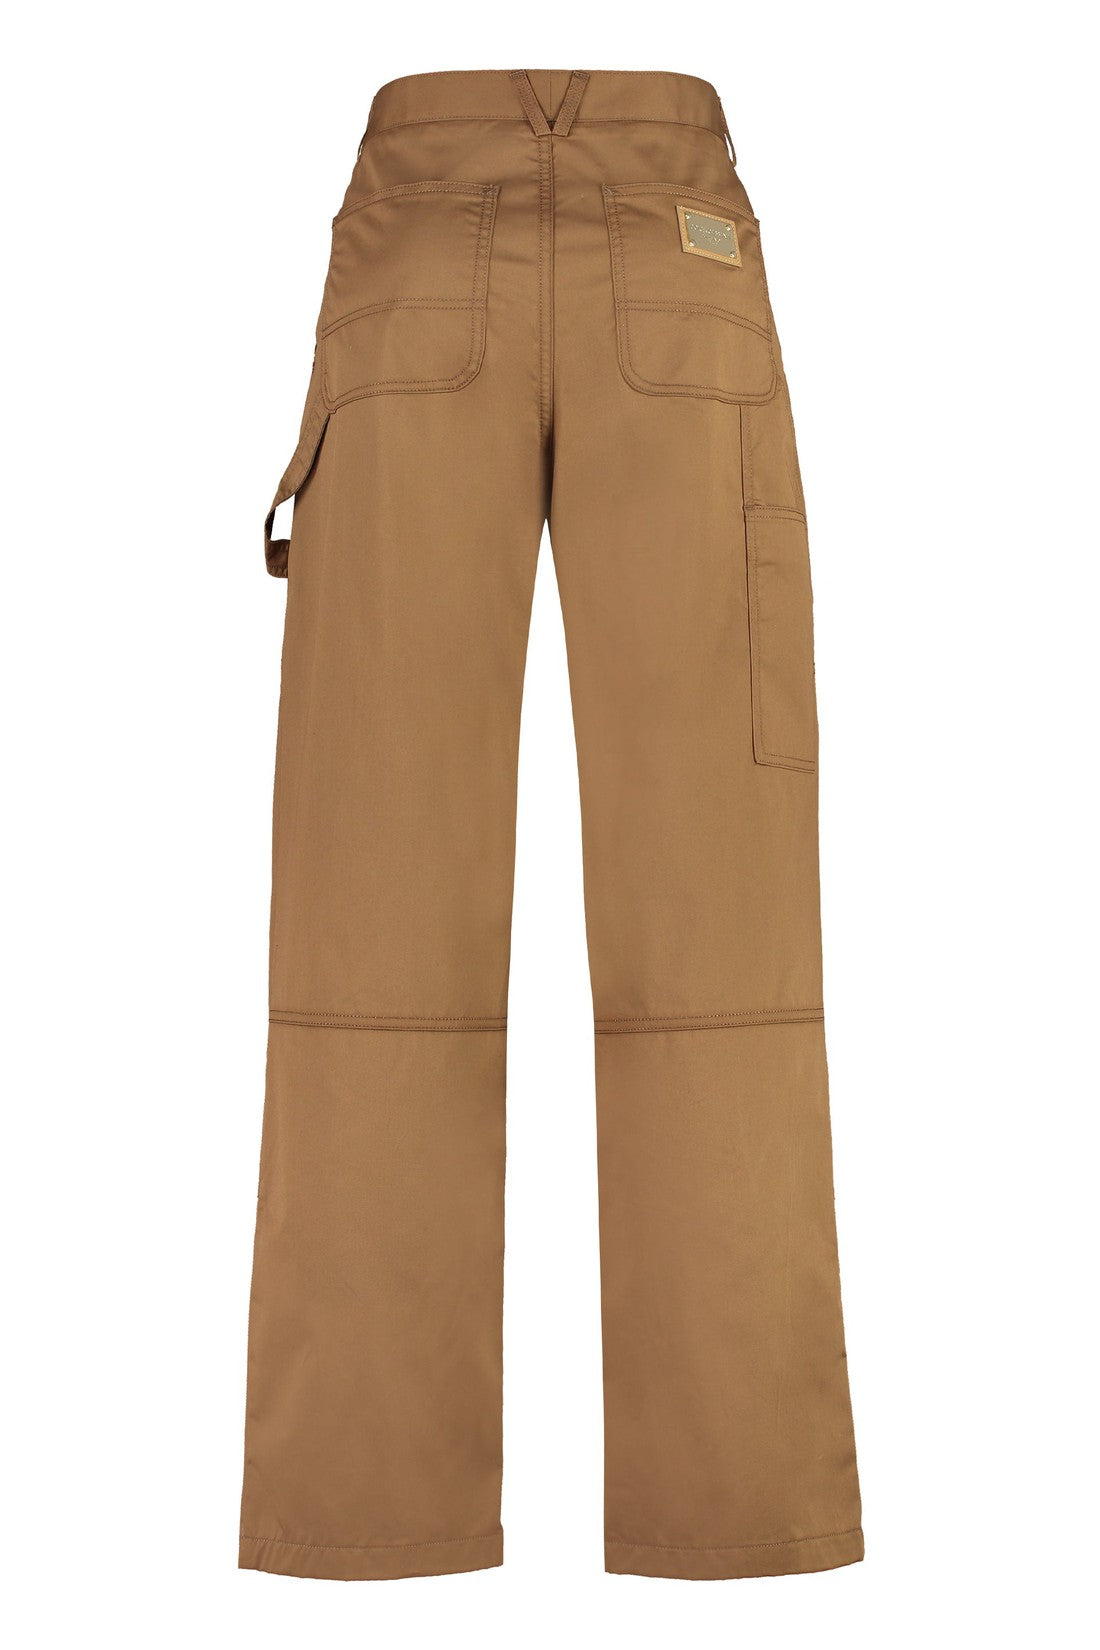 Dolce & Gabbana-OUTLET-SALE-Stretch cotton trousers-ARCHIVIST